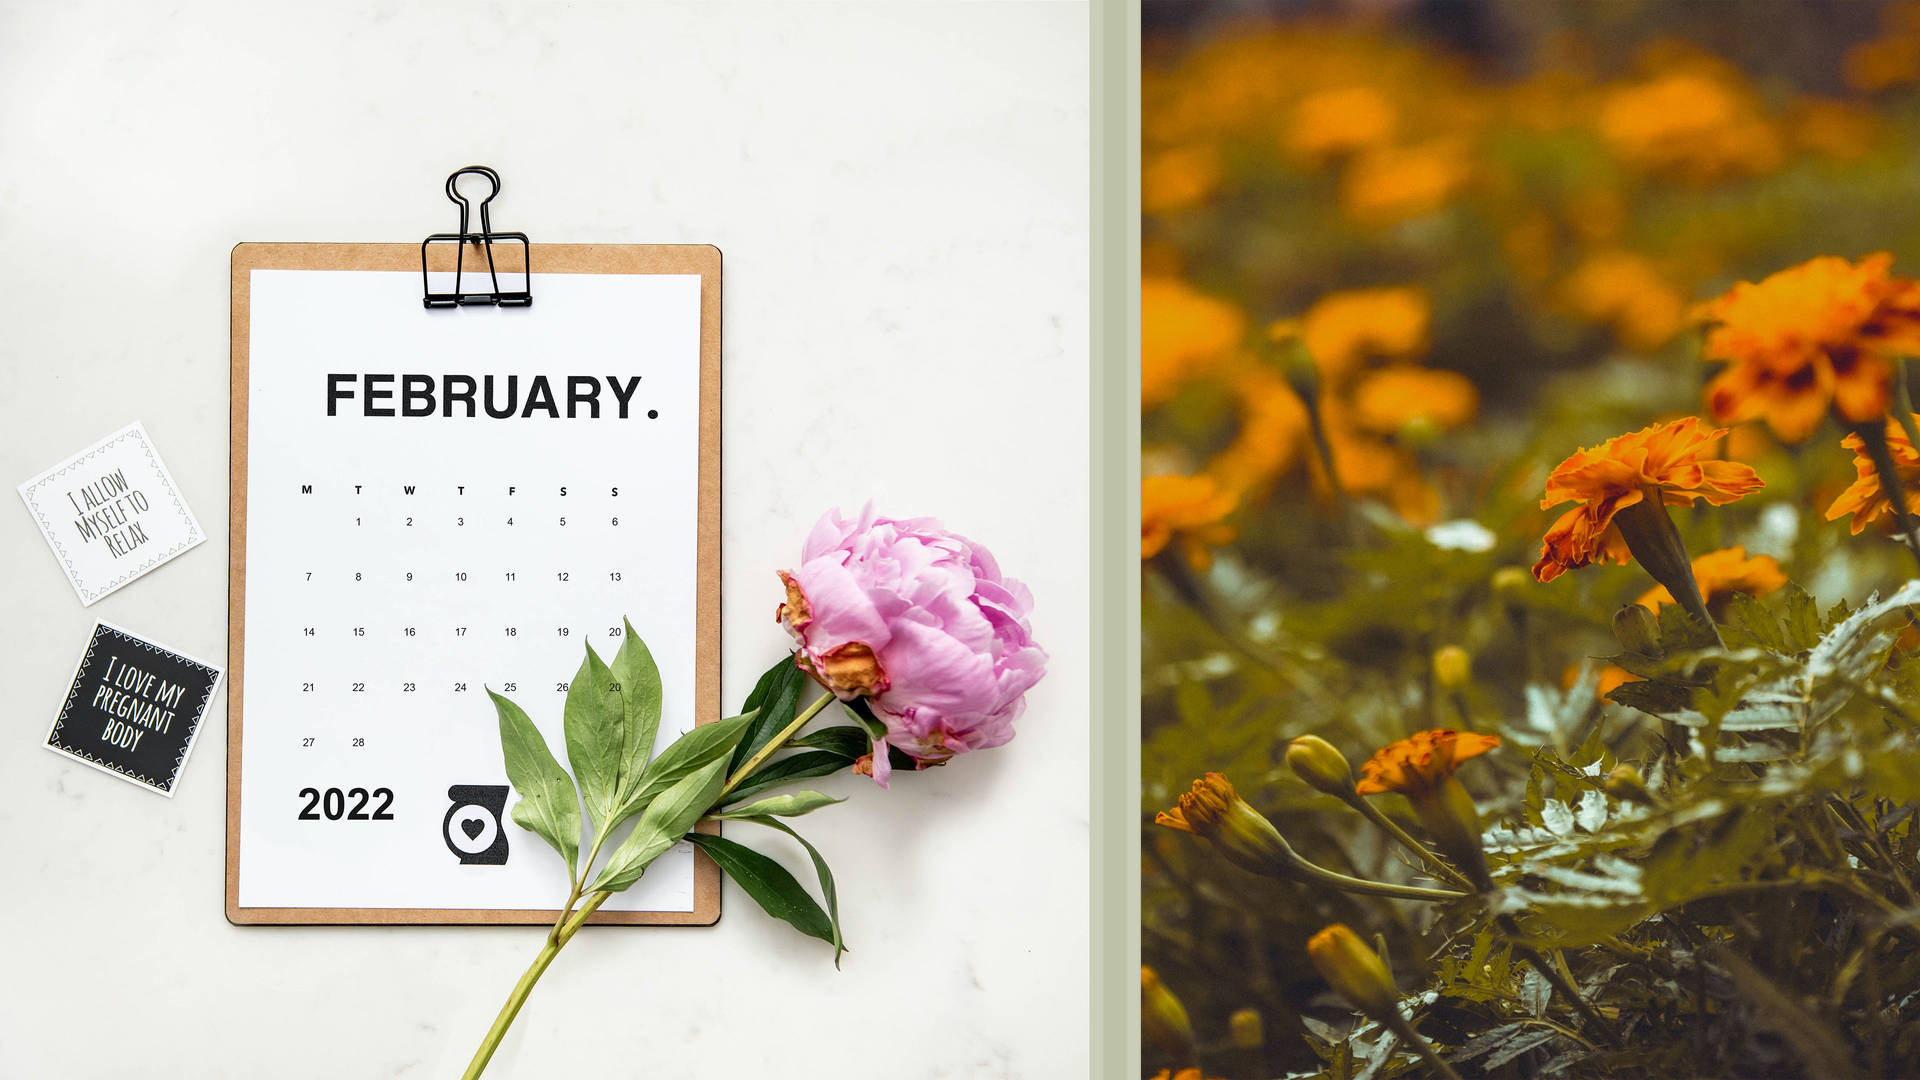 February 2022 Marigold Flower Calendar Wallpaper